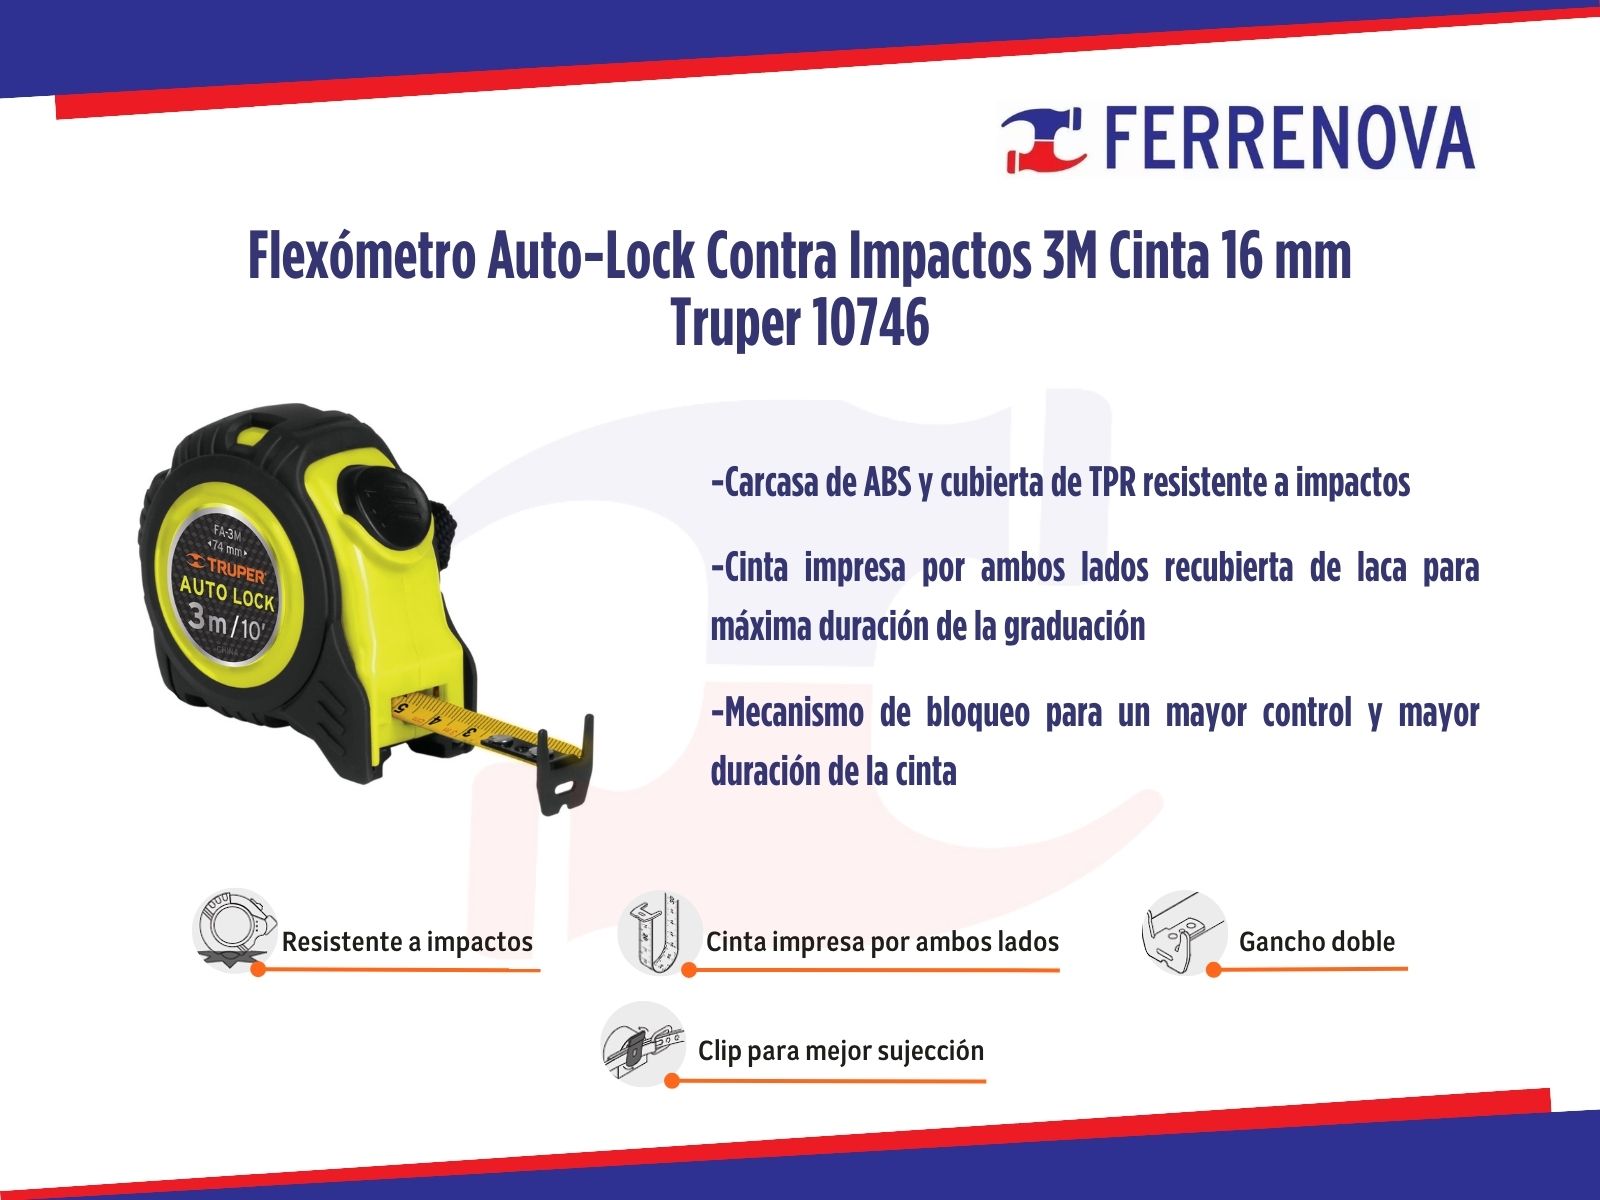 Flexómetro Auto-Lock Contra Impactos 3M Cinta 16 mm Truper 10746